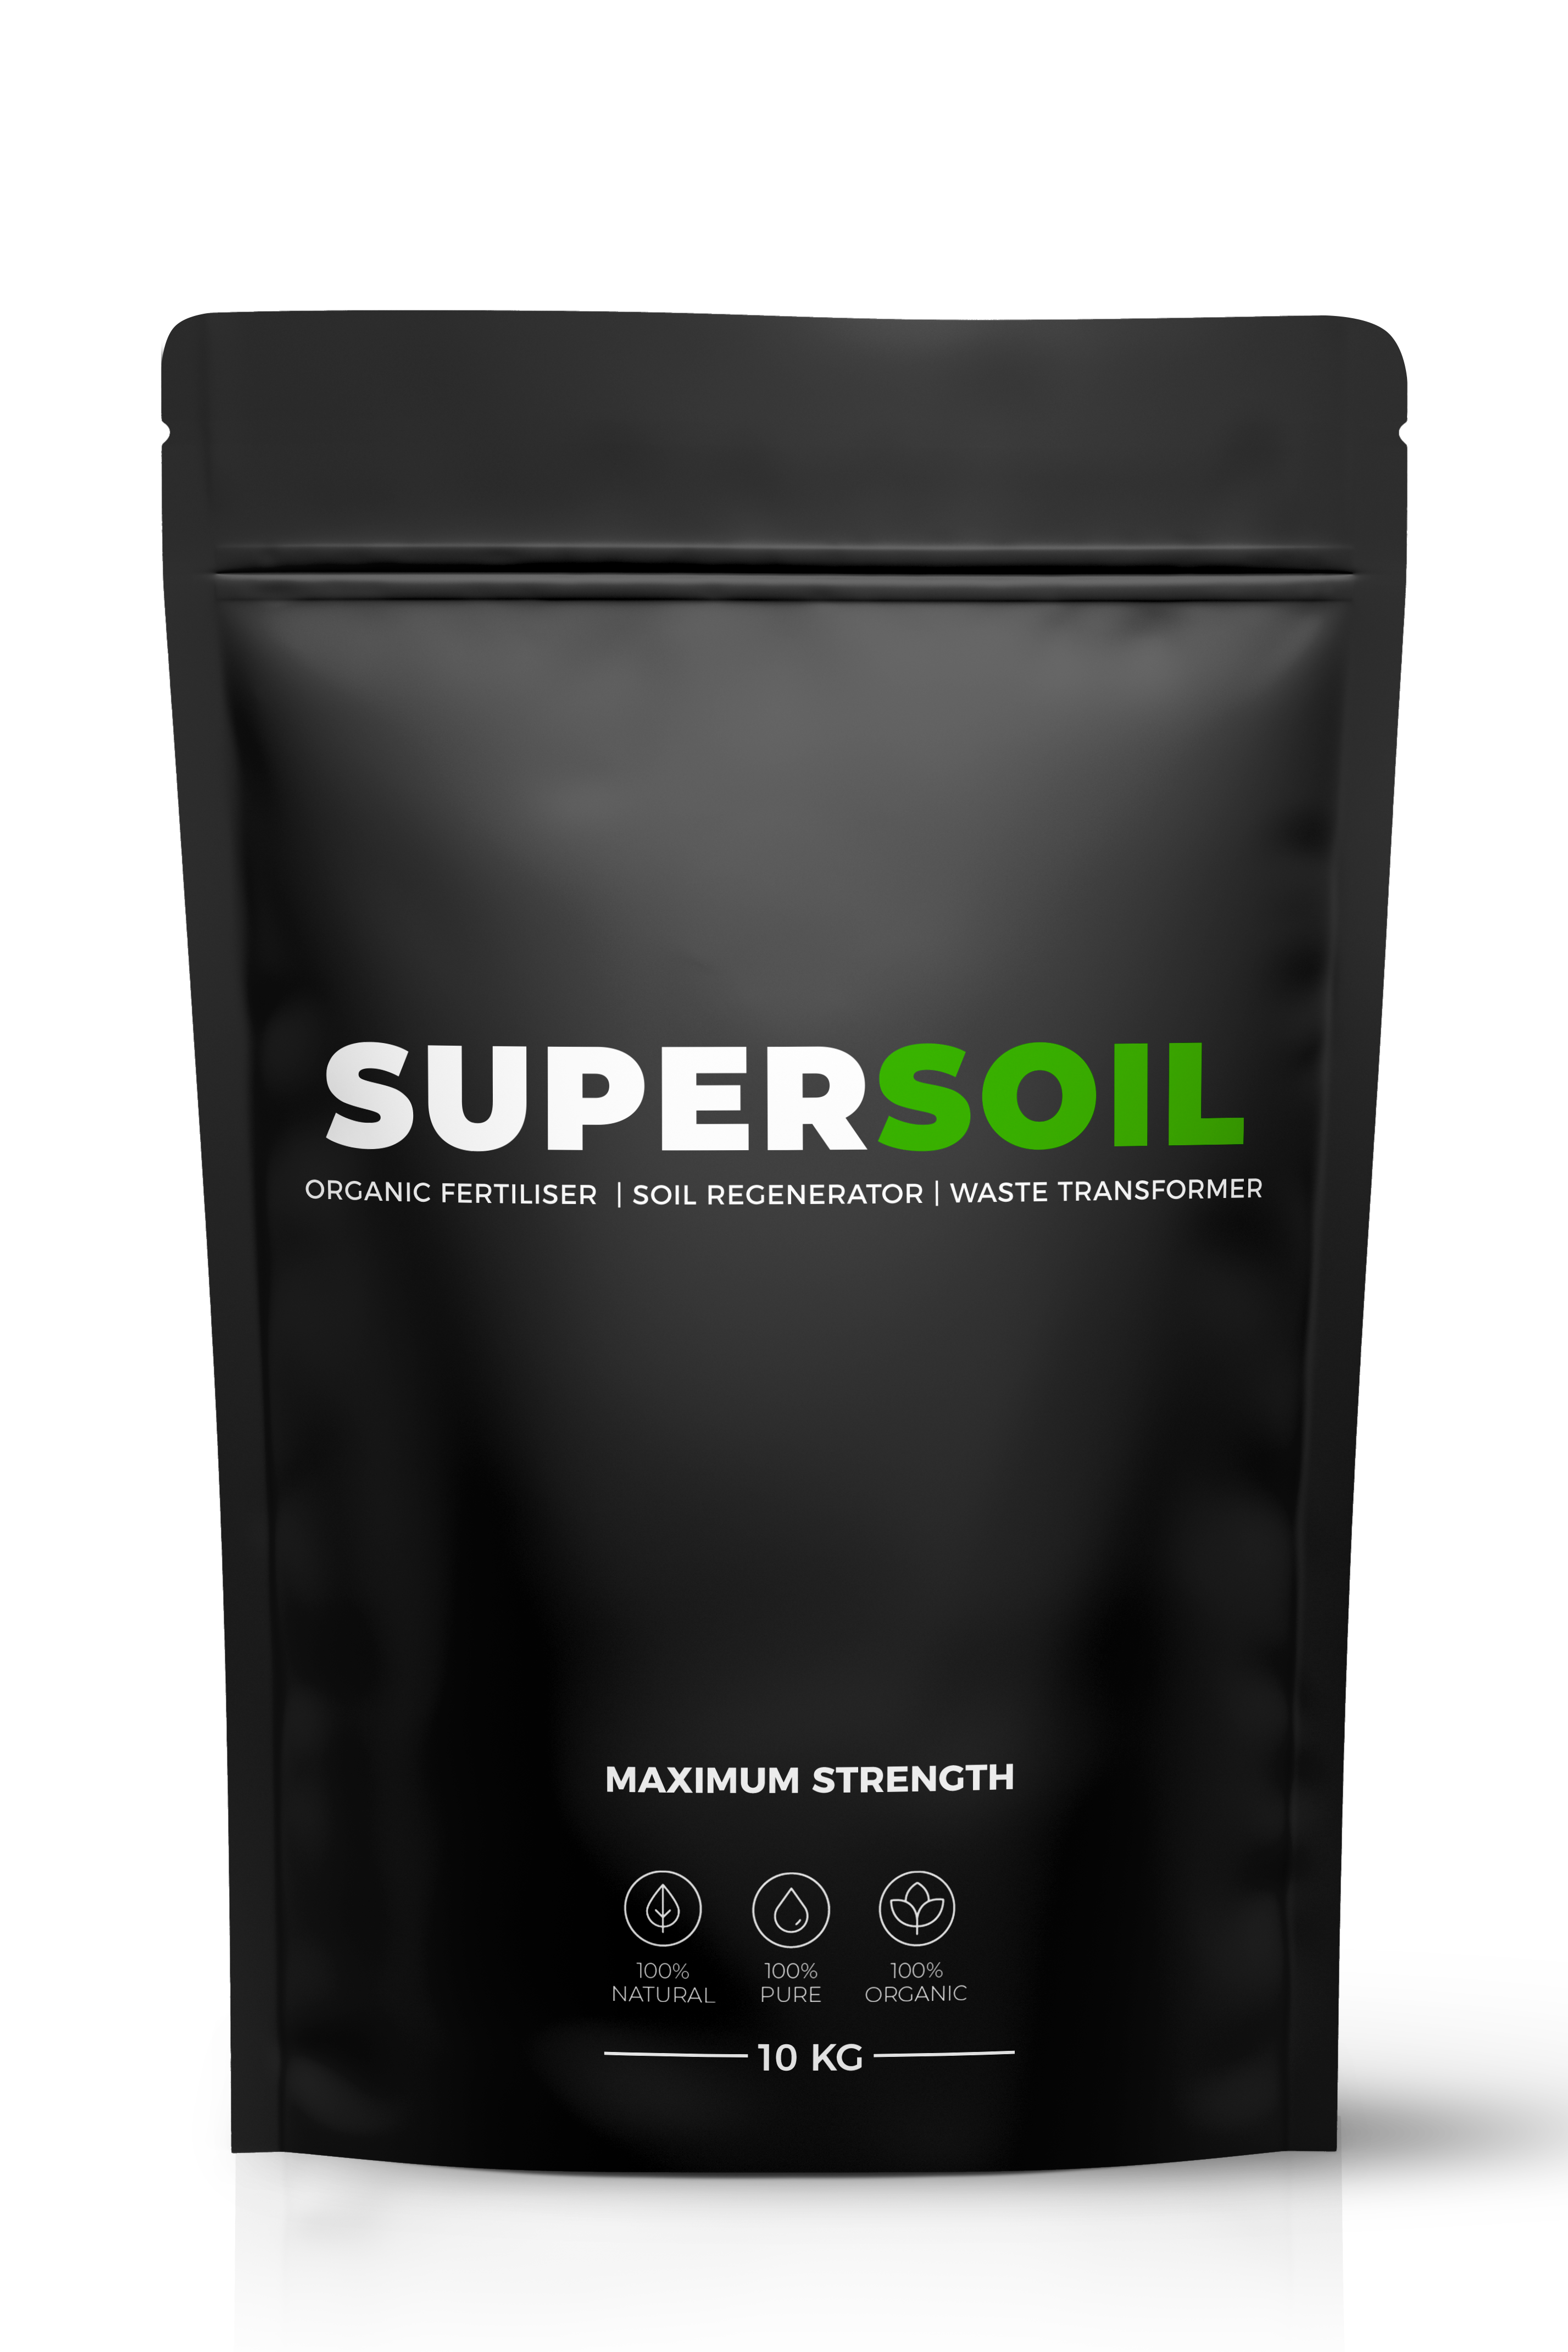 Supersoil Max Strength 10KG - Black Friday